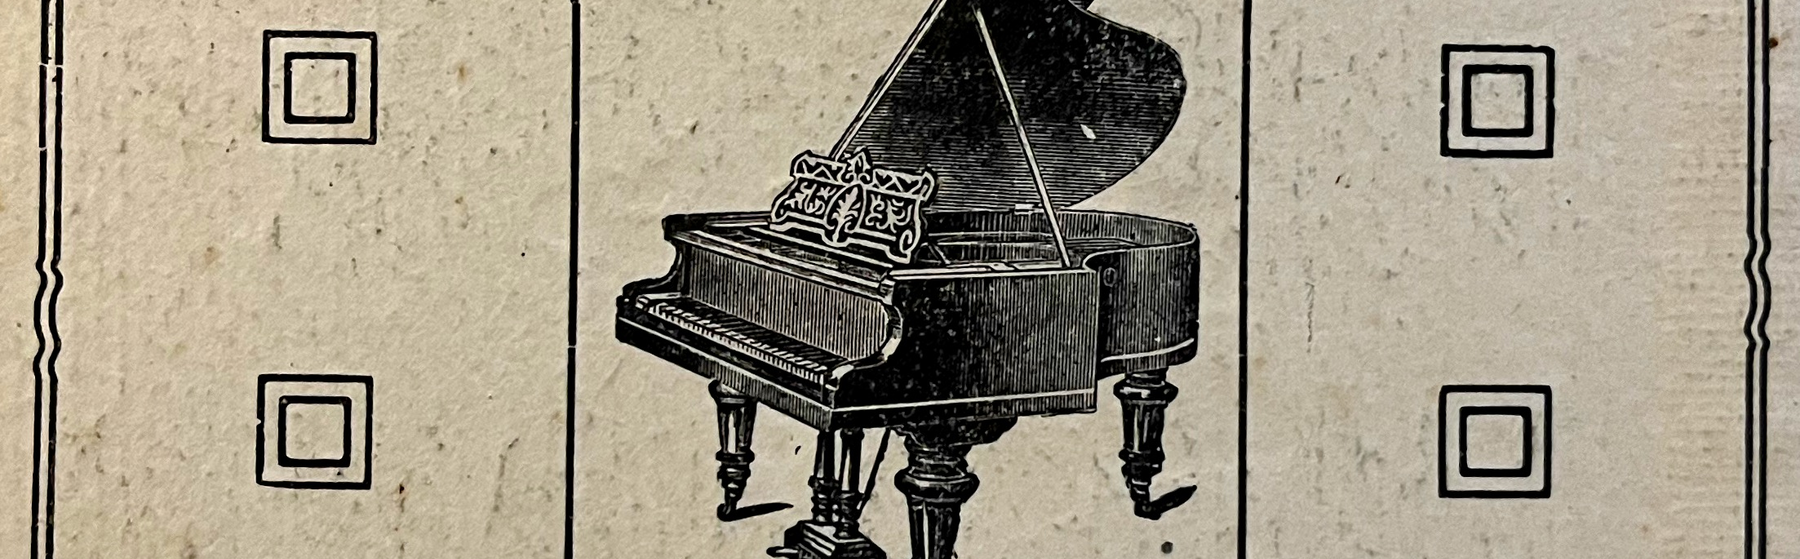 Werbung Piano- und Harmonium-Haus Stolzenberg